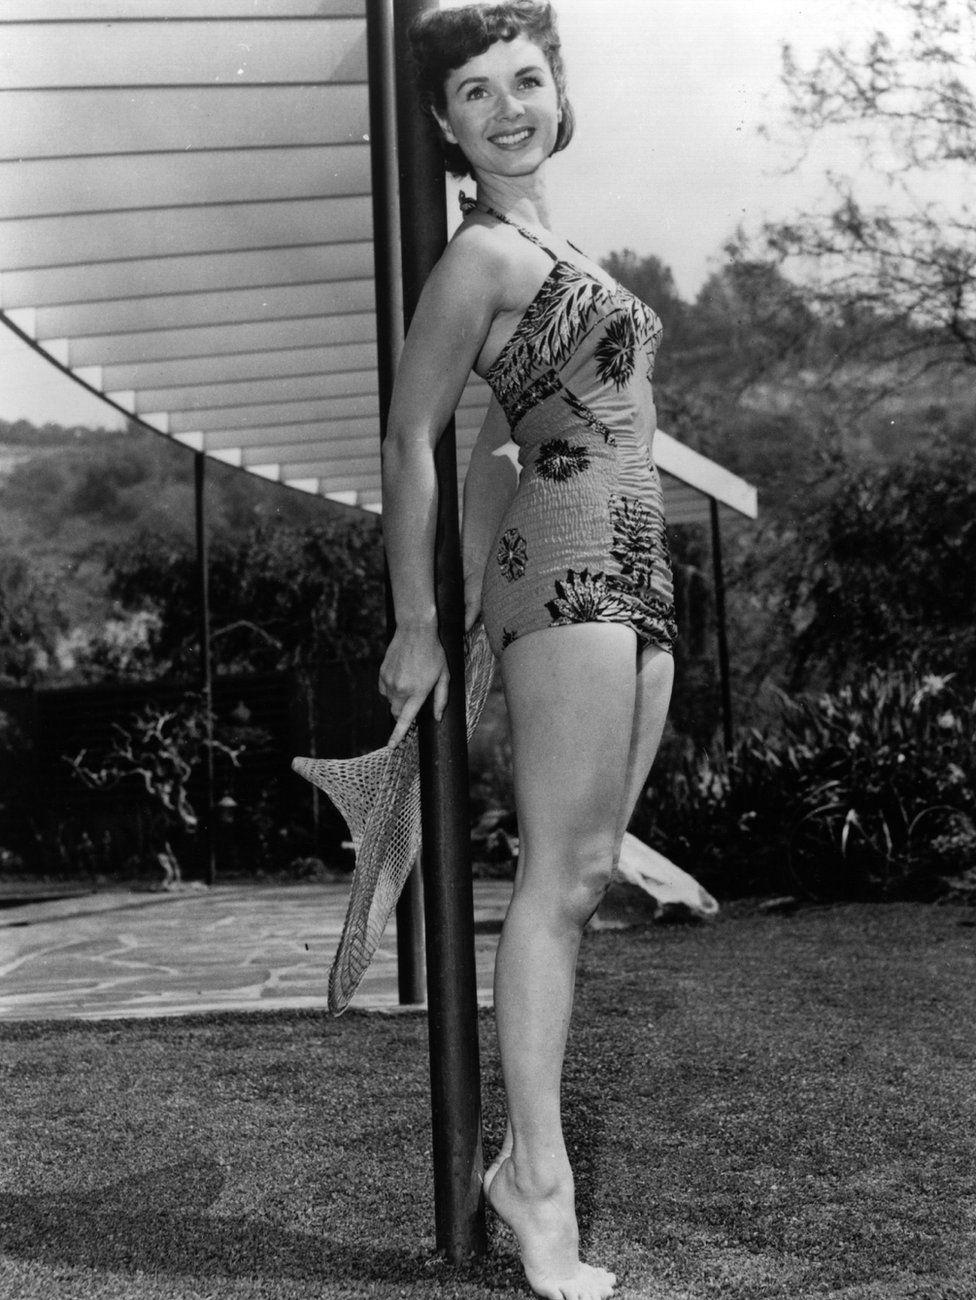 American actress, Debbie Reynolds modelling a swimsuit in the garden. Original Publication: